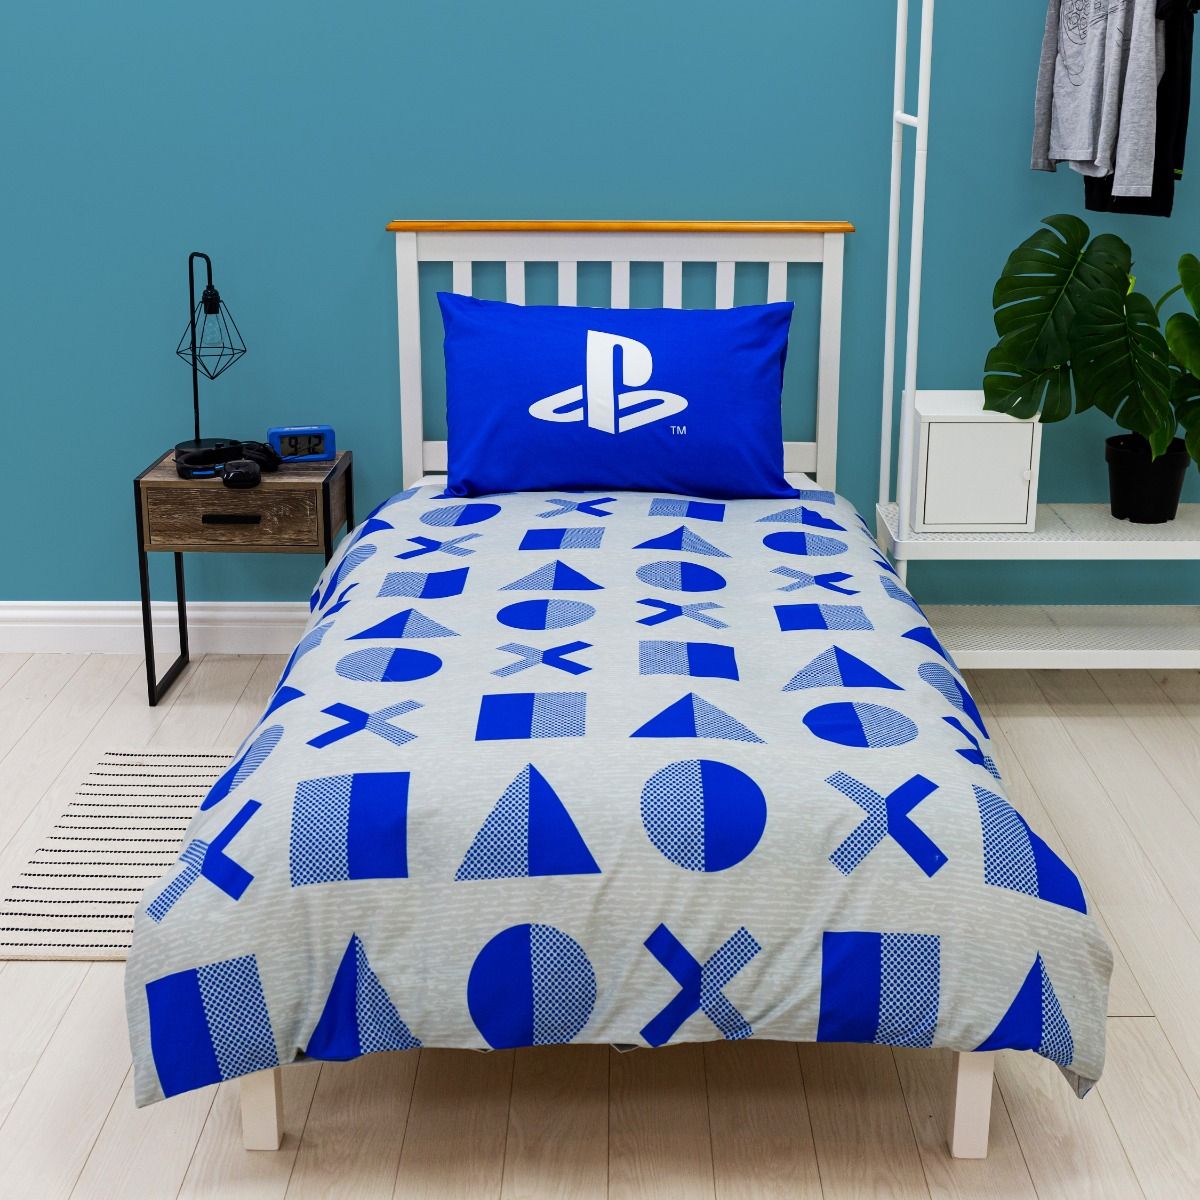 Playstation Layer Duvet Set - Blue